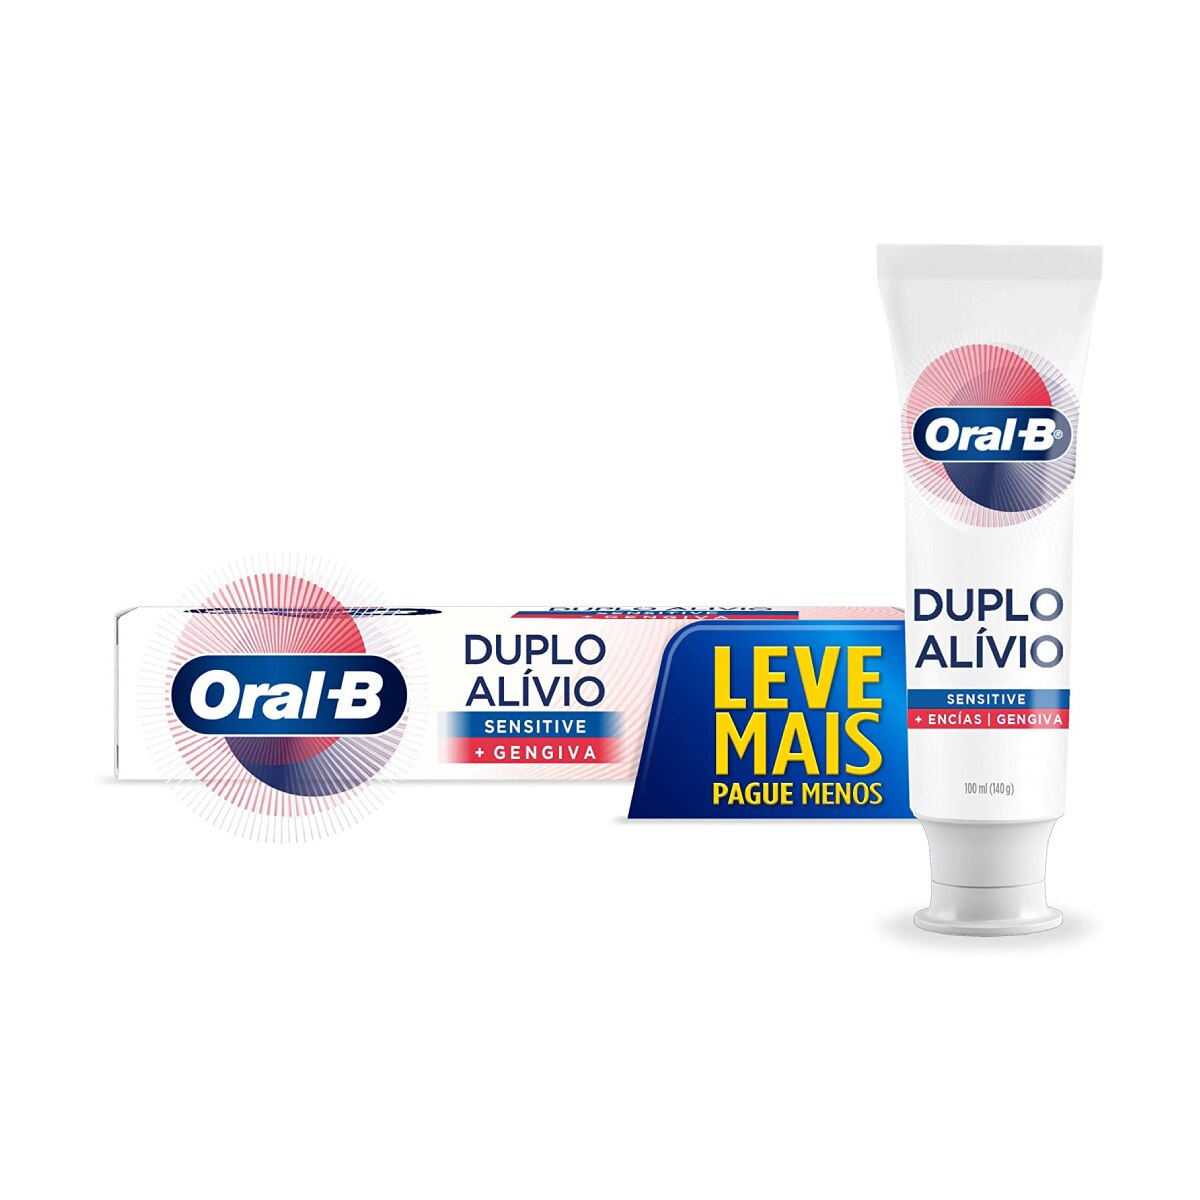 Creme Dental Oral-B Duplo Alivio Sensitive 140g